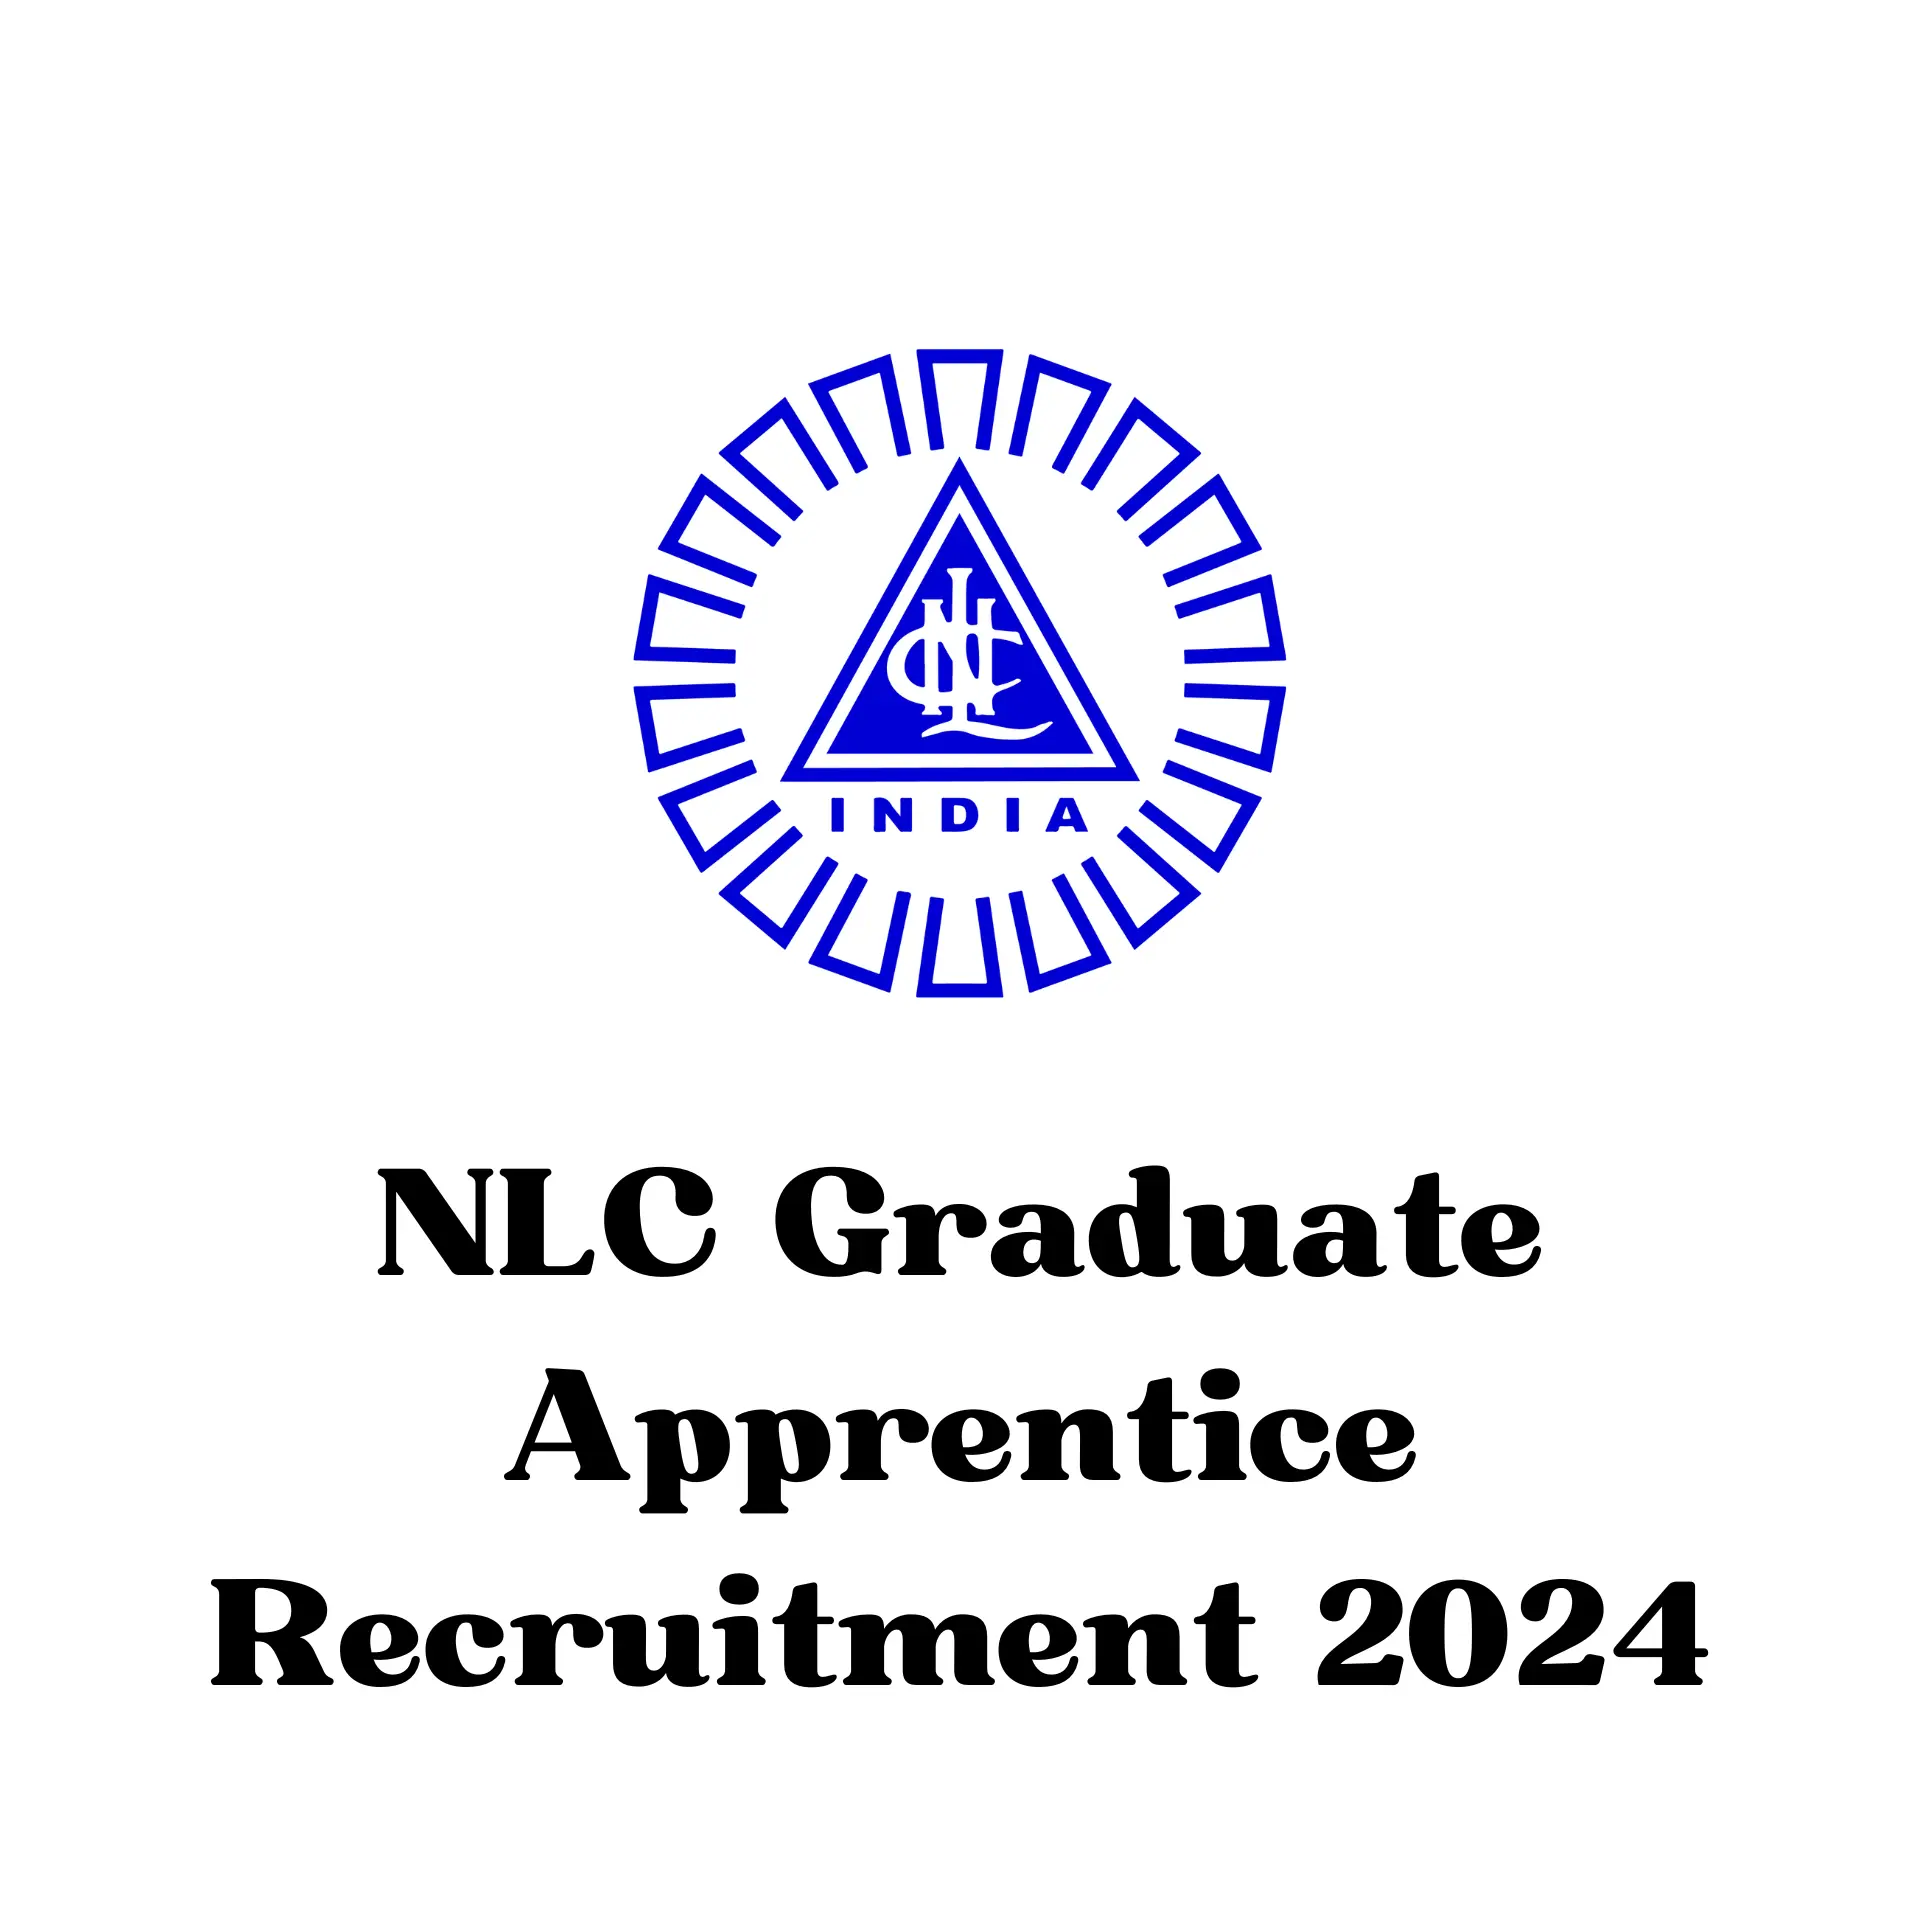 NLC Recruitment 2024